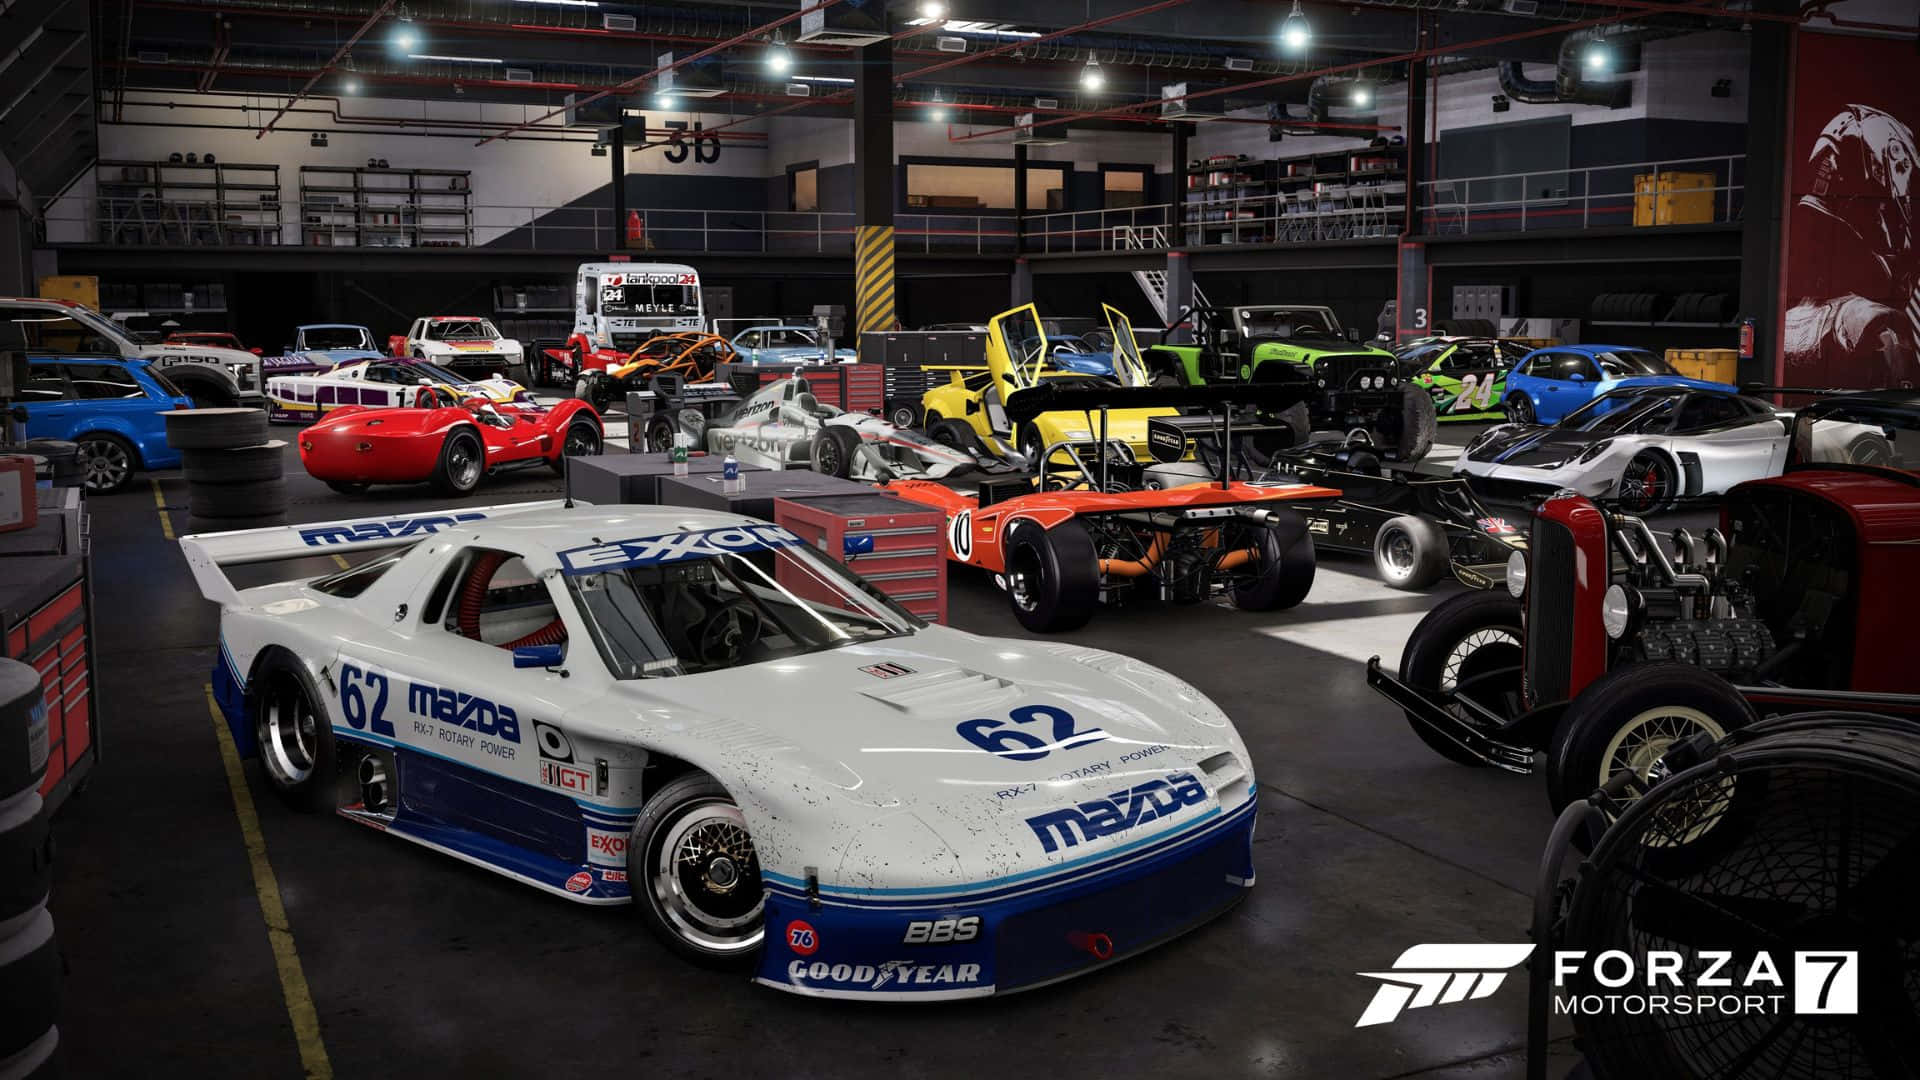 Hd Forza Motorsport 7 Background In Store Room Wallpaper